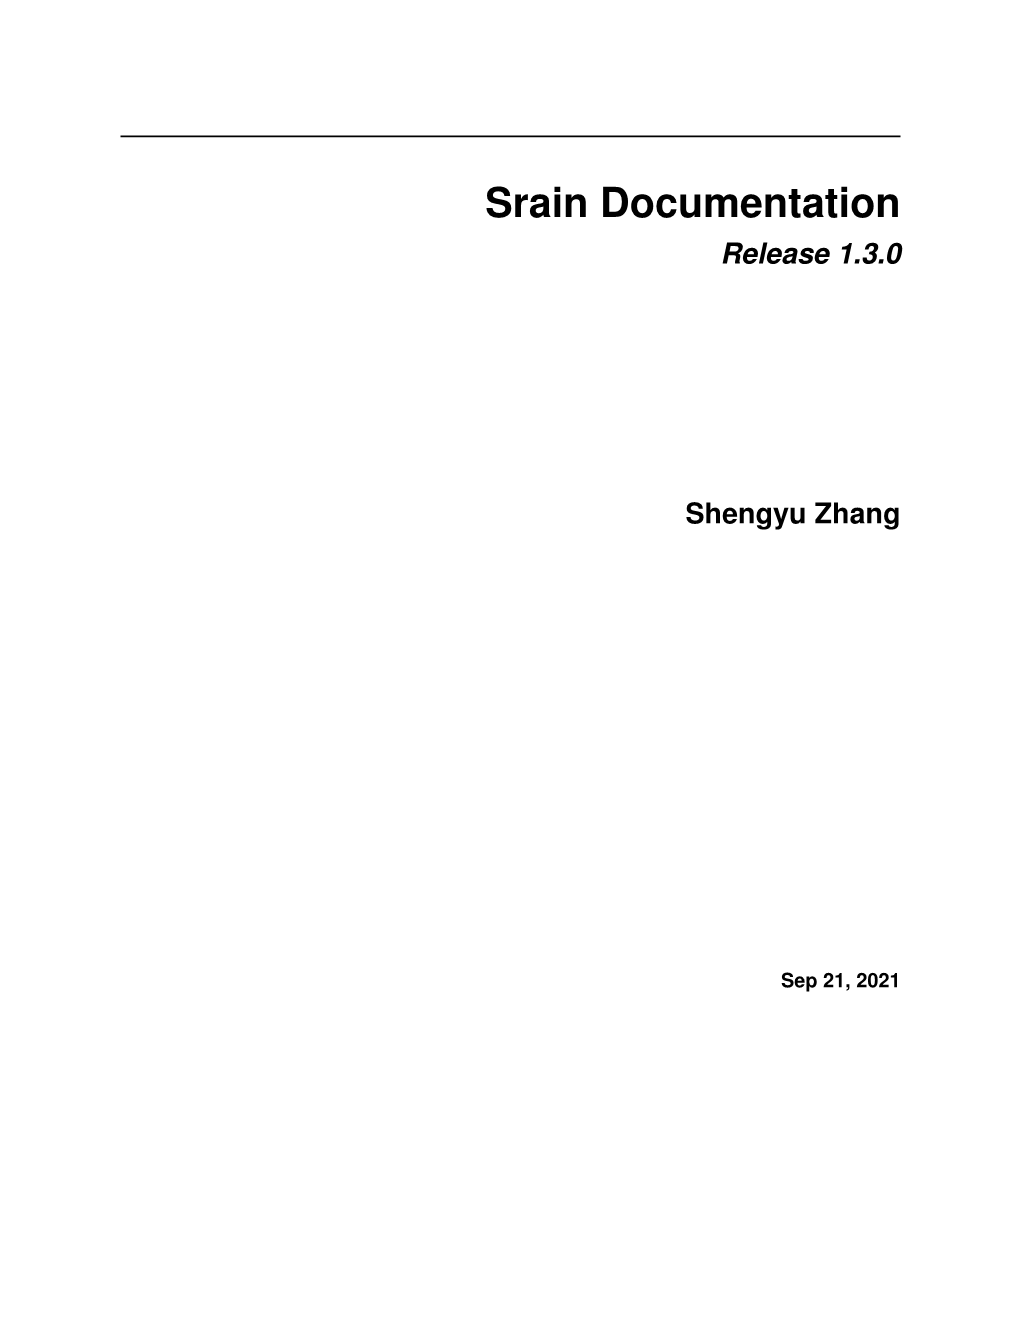 Srain Documentation Release 1.3.0